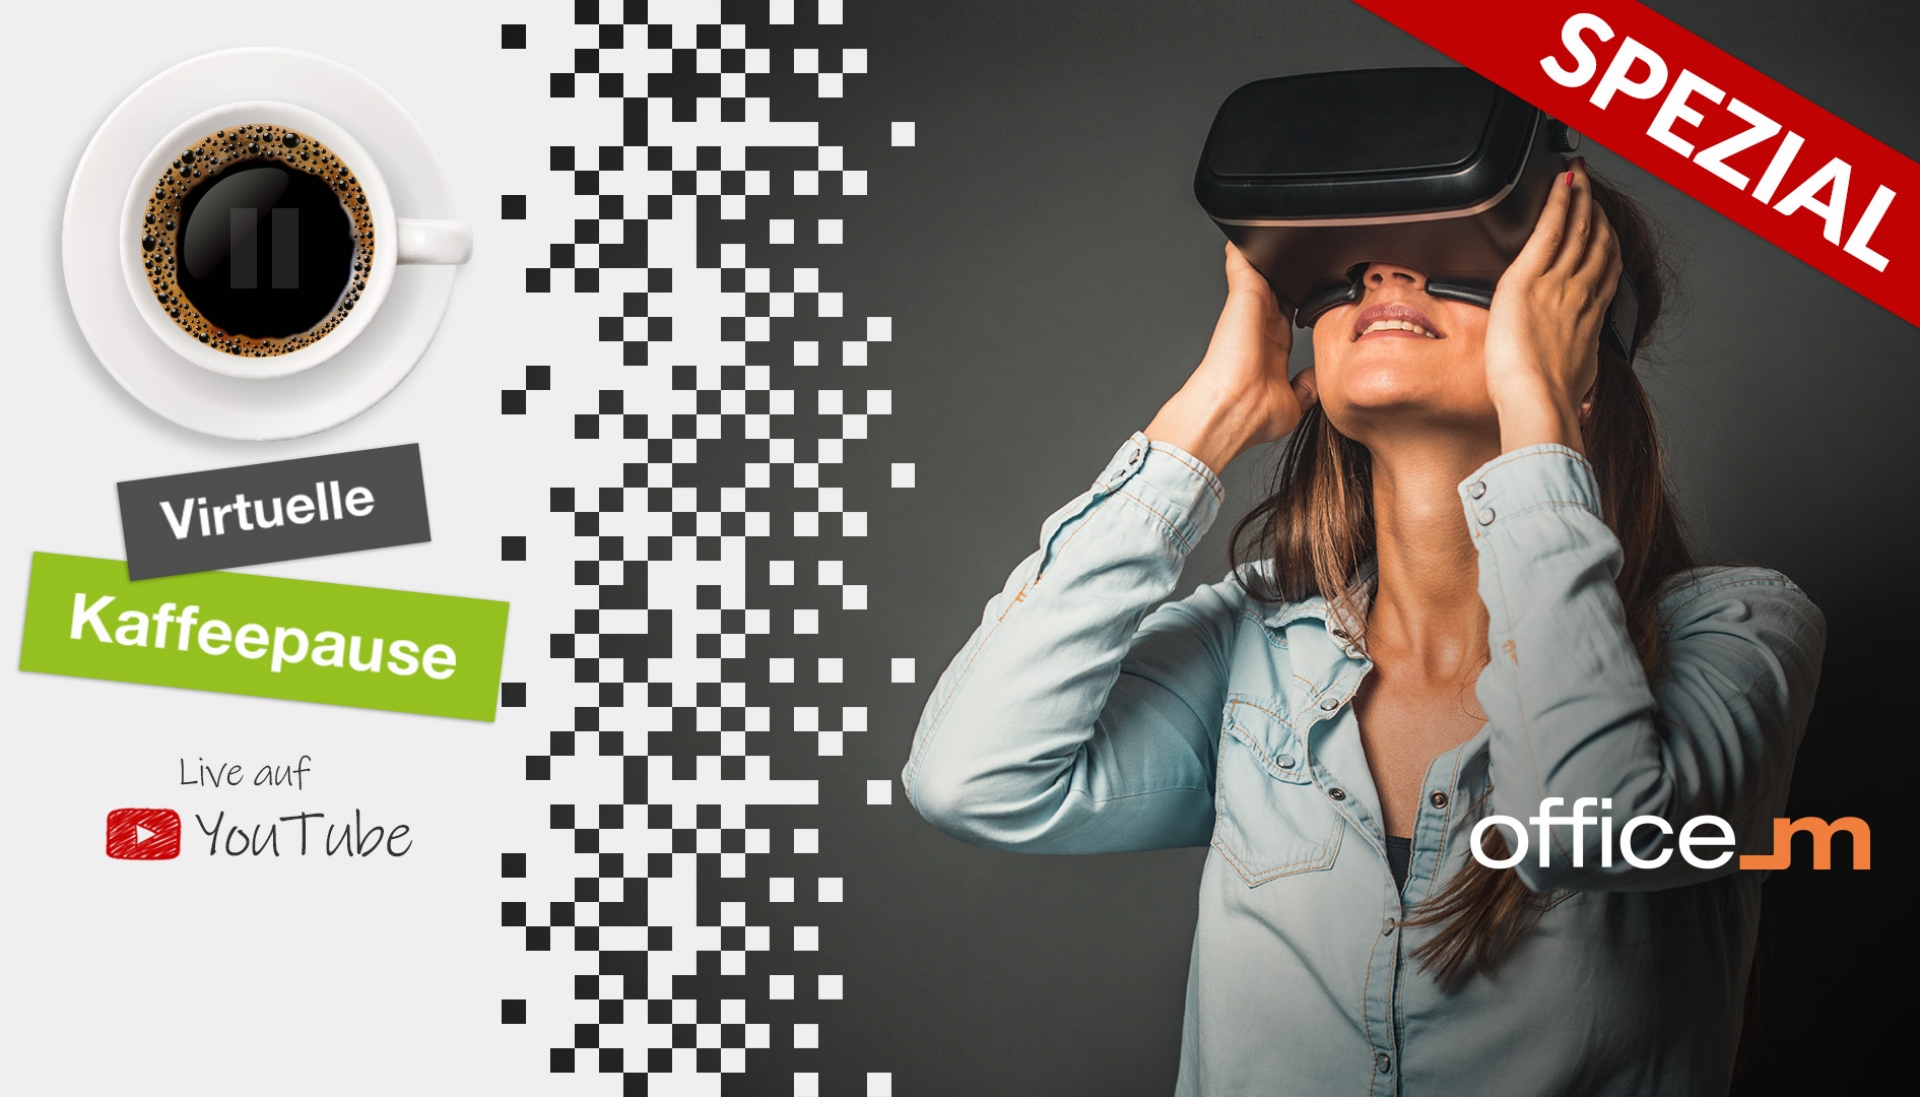 Virtuelle Kaffeepause: Kundenberatung revolutionieren mit Virtual Reality